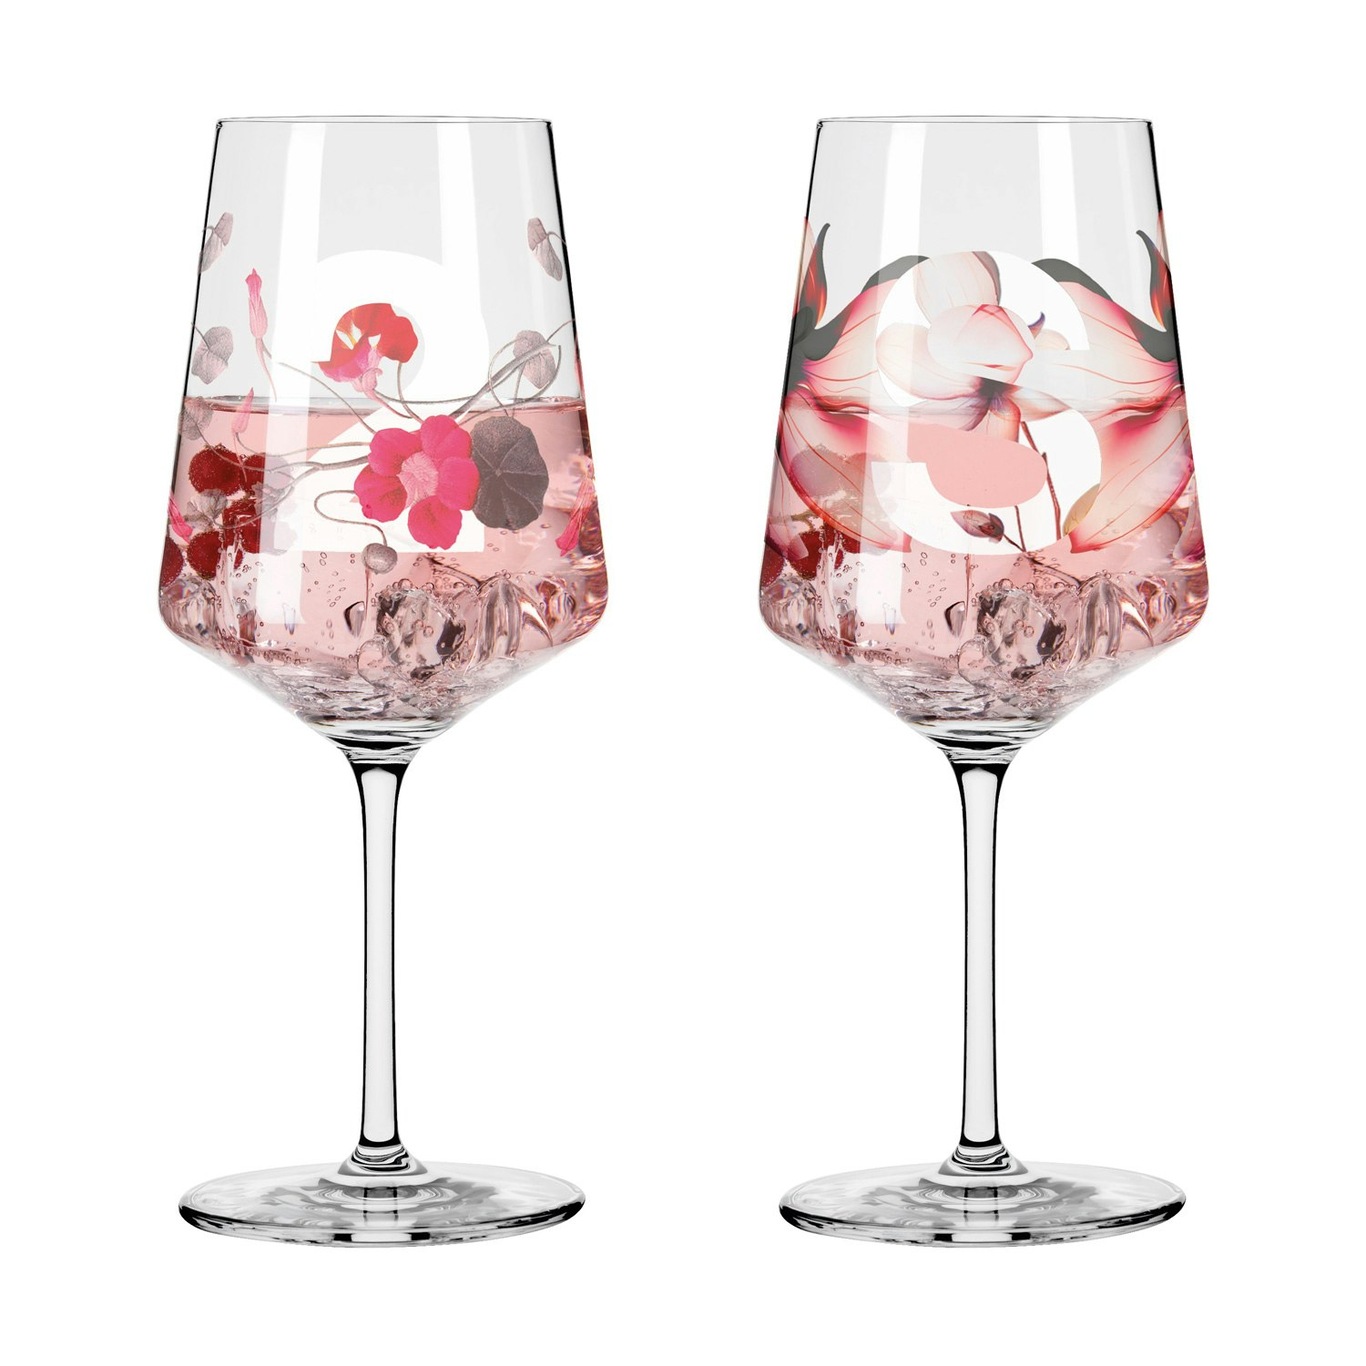 Sommersonett Wine Glass 2-pack, NO: 2 - Ritzenhoff @ RoyalDesign